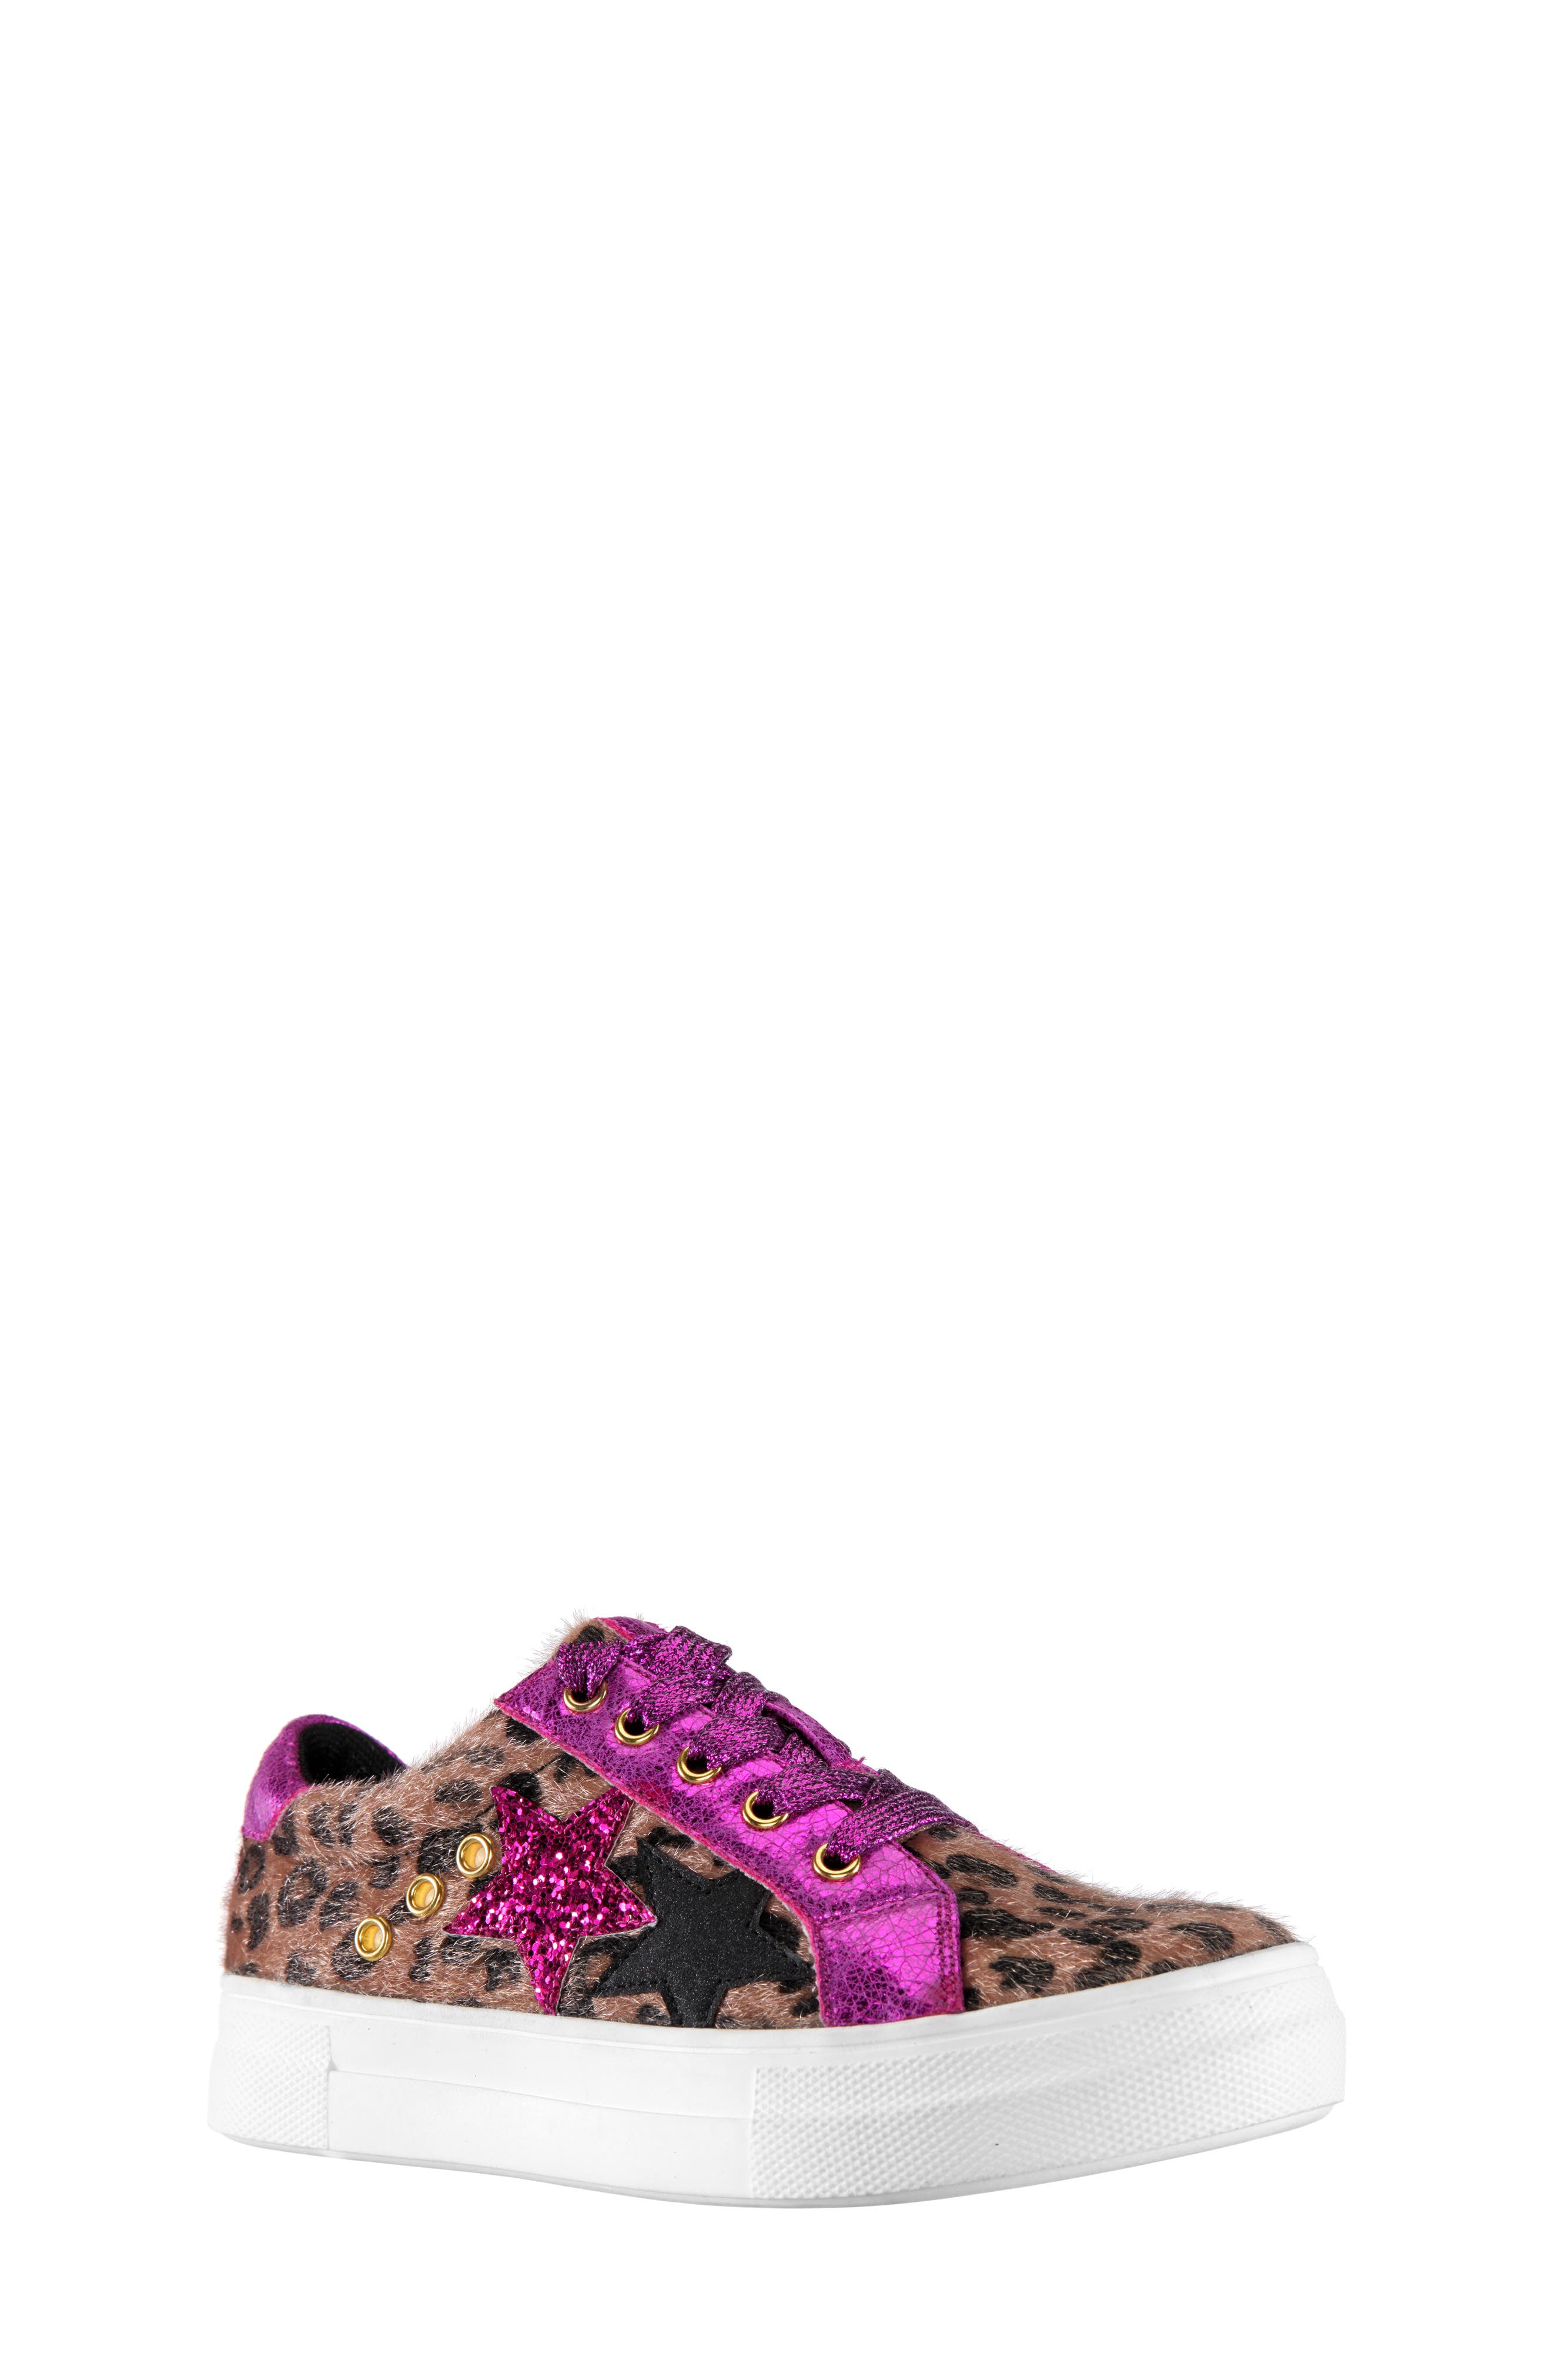 UPC 794378405252 product image for Toddler Girl's Nina Lizzet Glitter Sneaker, Size 12 M - Pink | upcitemdb.com